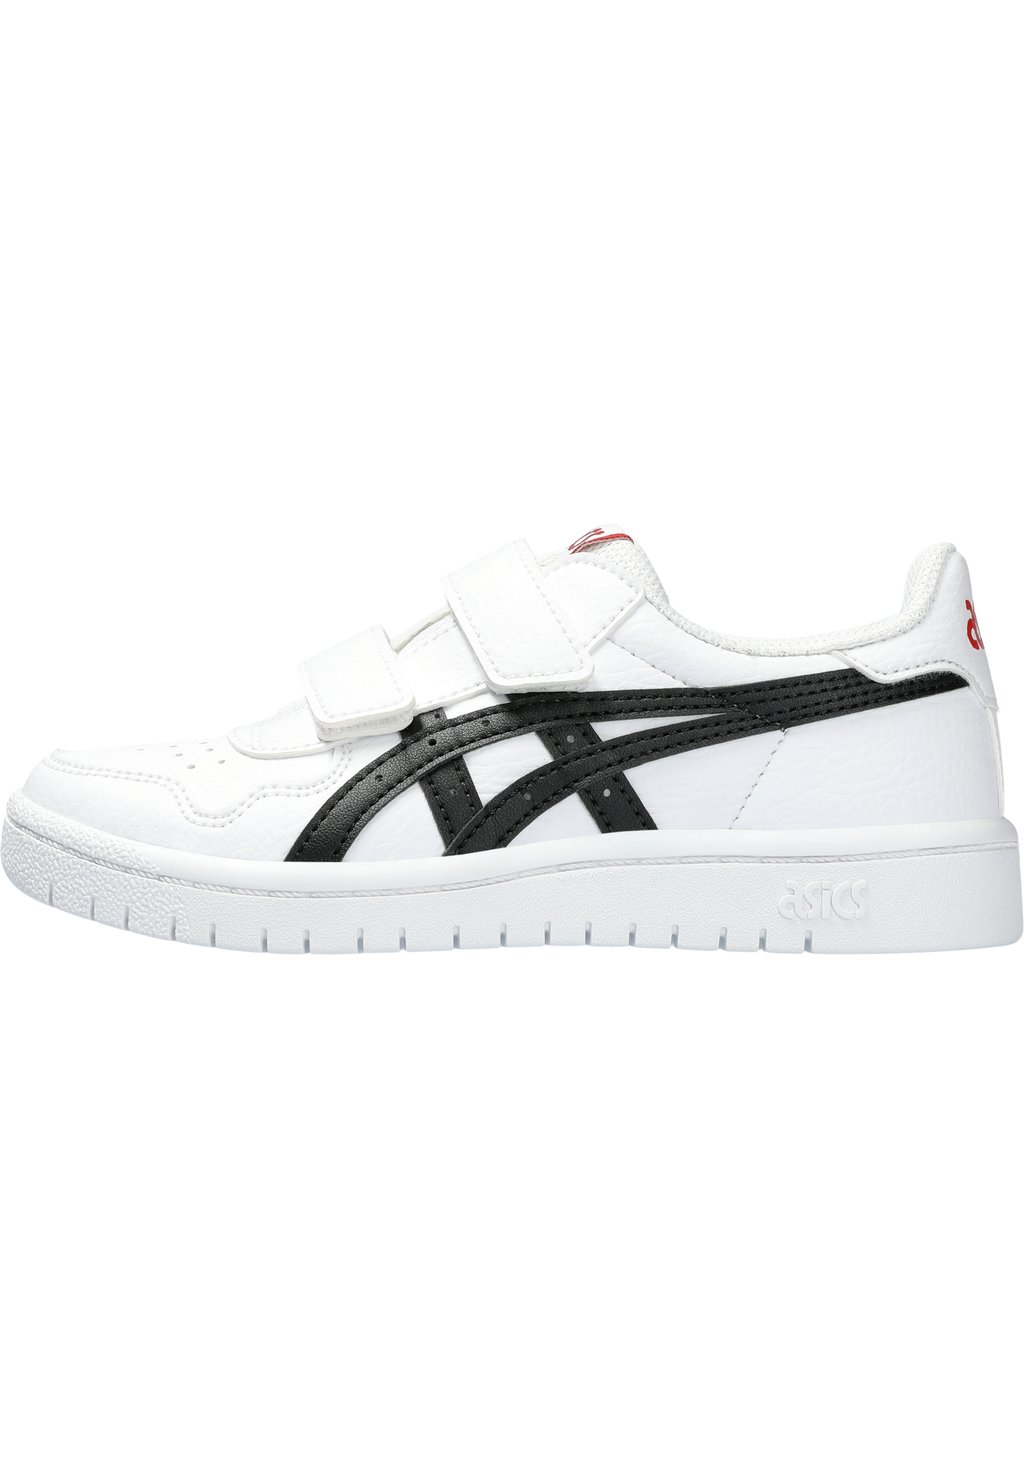 Кроссовки низкие JAPAN S PS ASICS SportStyle, цвет white black